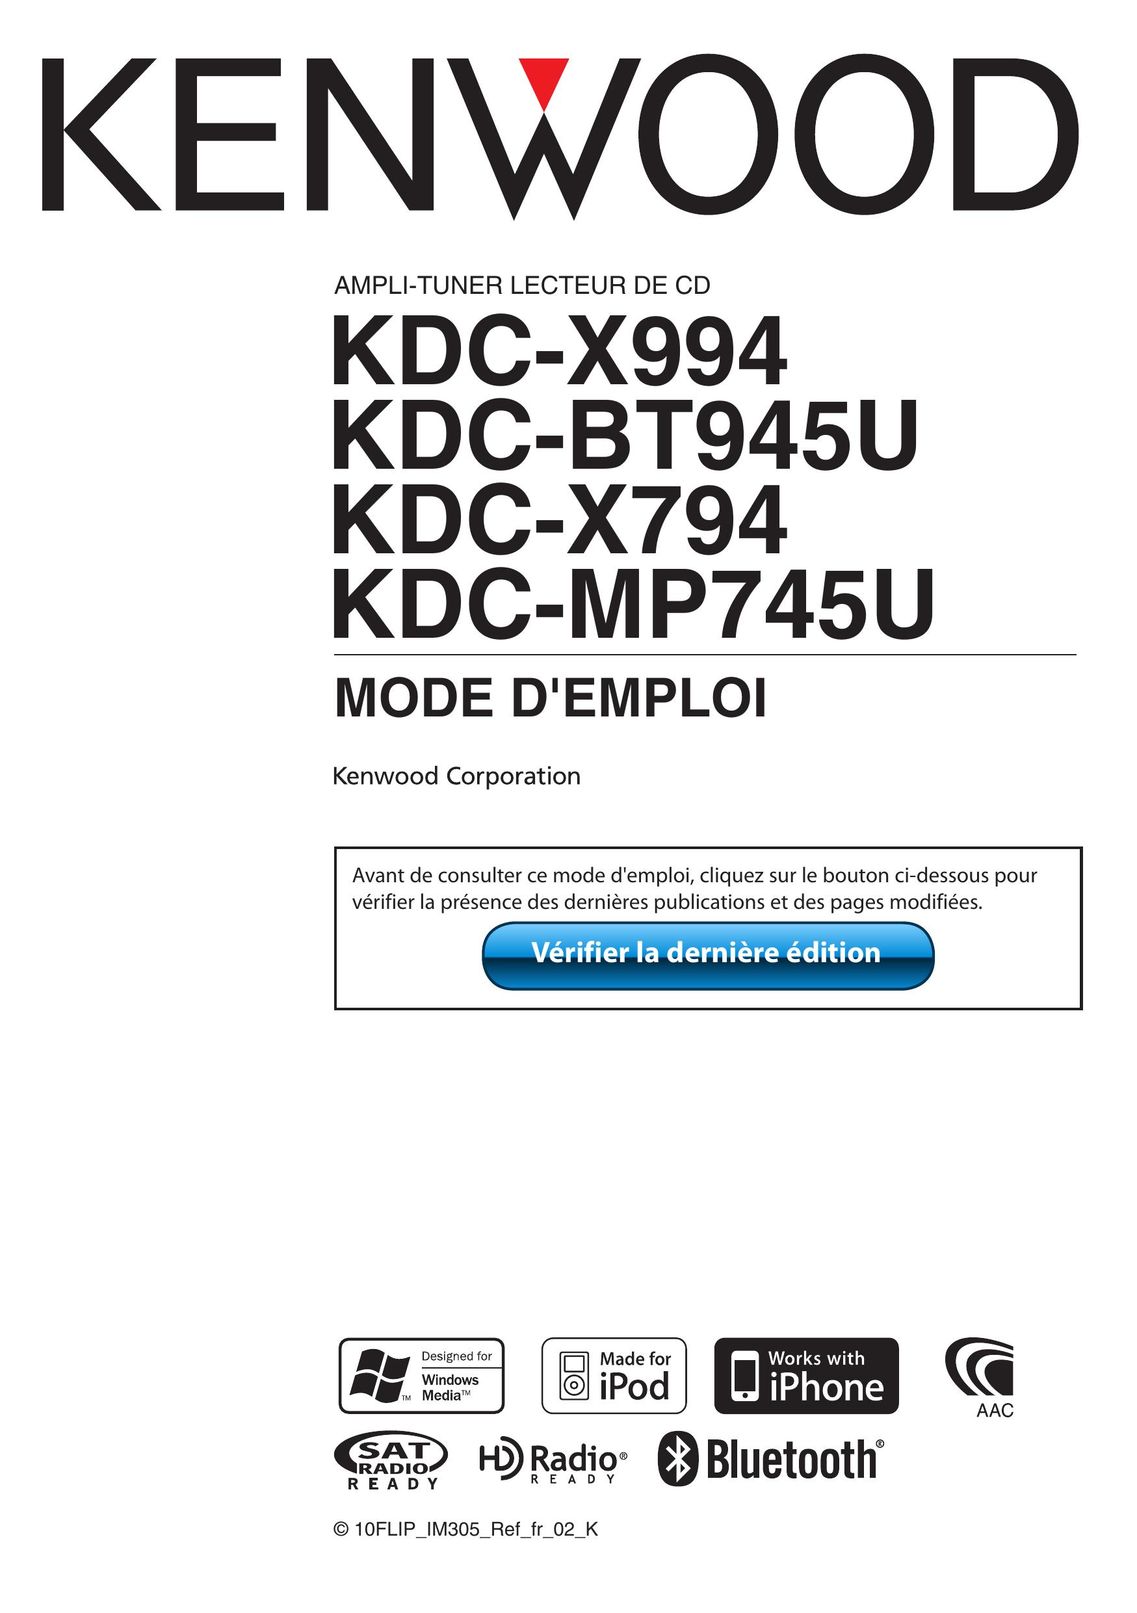 Kenwood kdc-x994 Car Amplifier User Manual